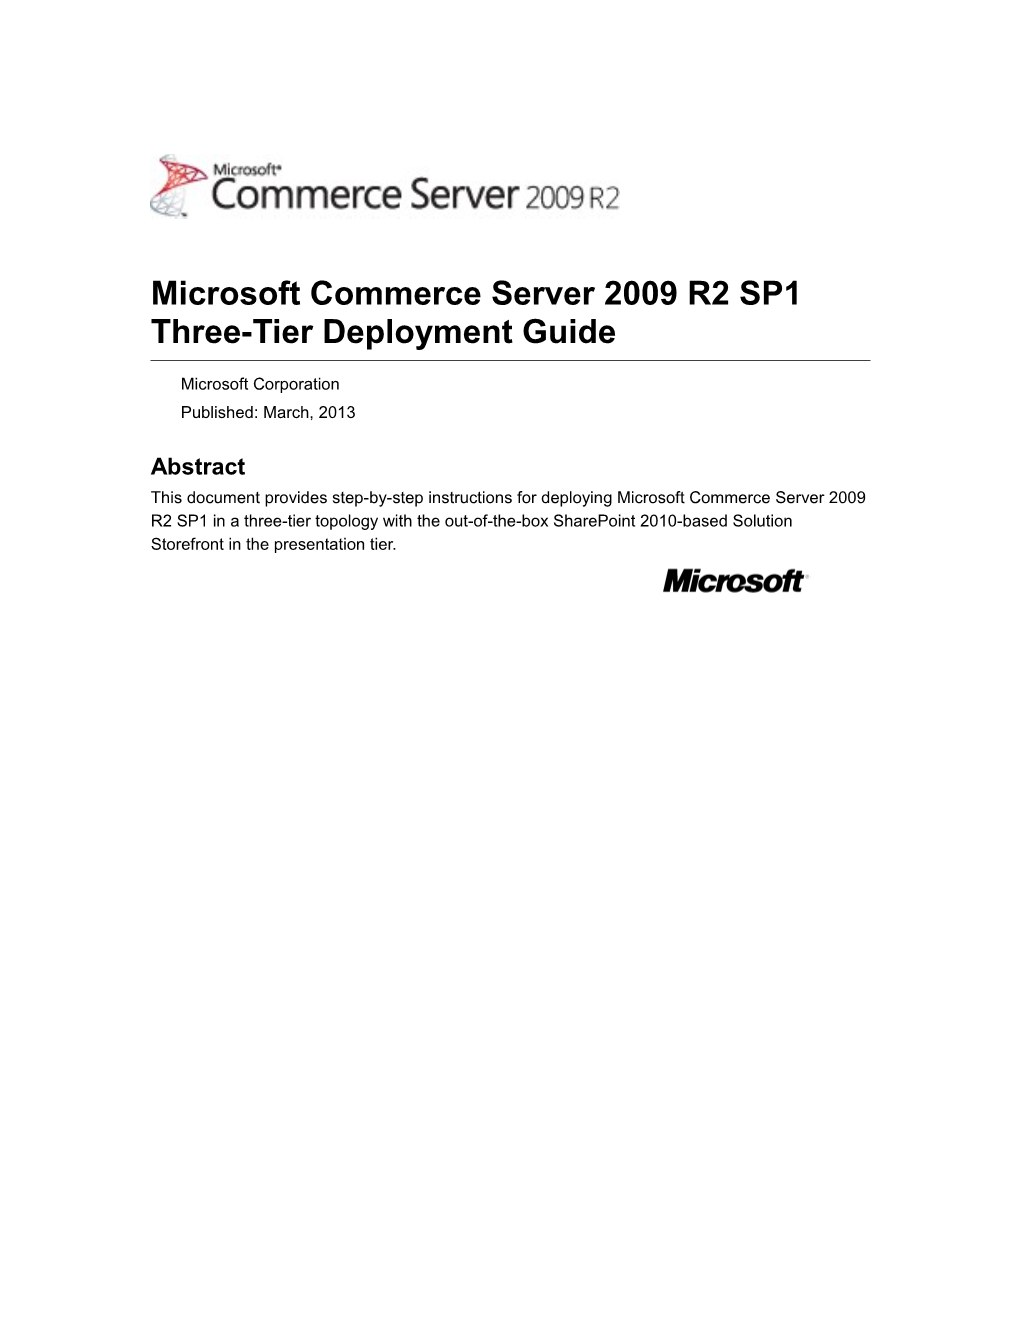 Microsoft Commerce Server 2009 R2 SP1 Three-Tier Deployment Guide